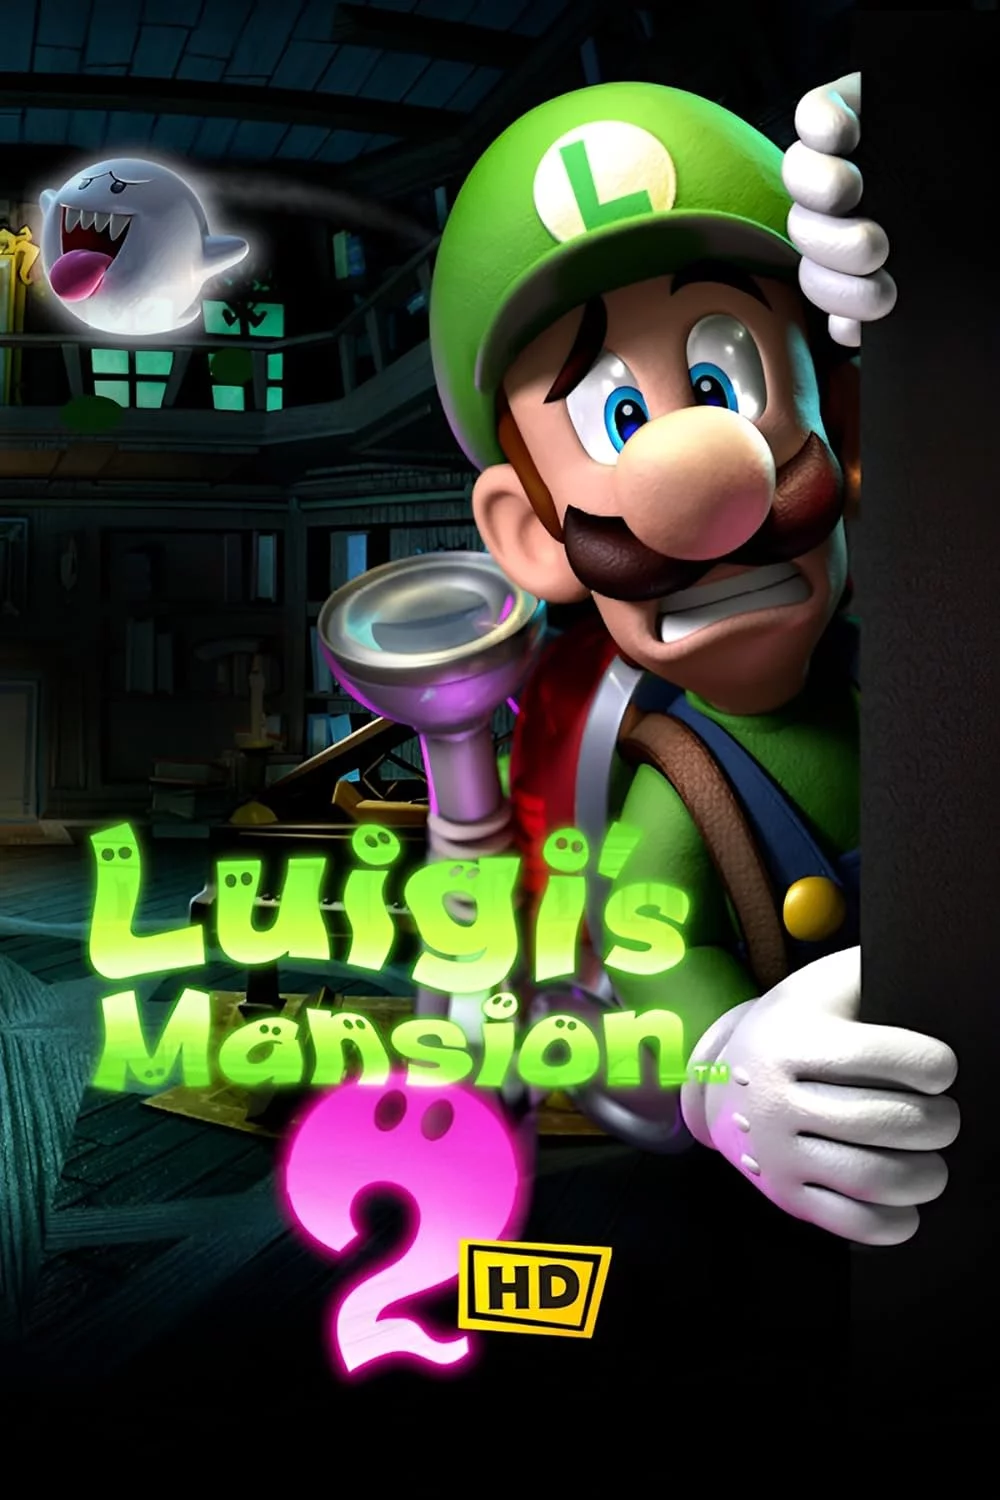 Luigi's Mansion 2 HD – recenzja gry. Nintendowskie Ghostbusters